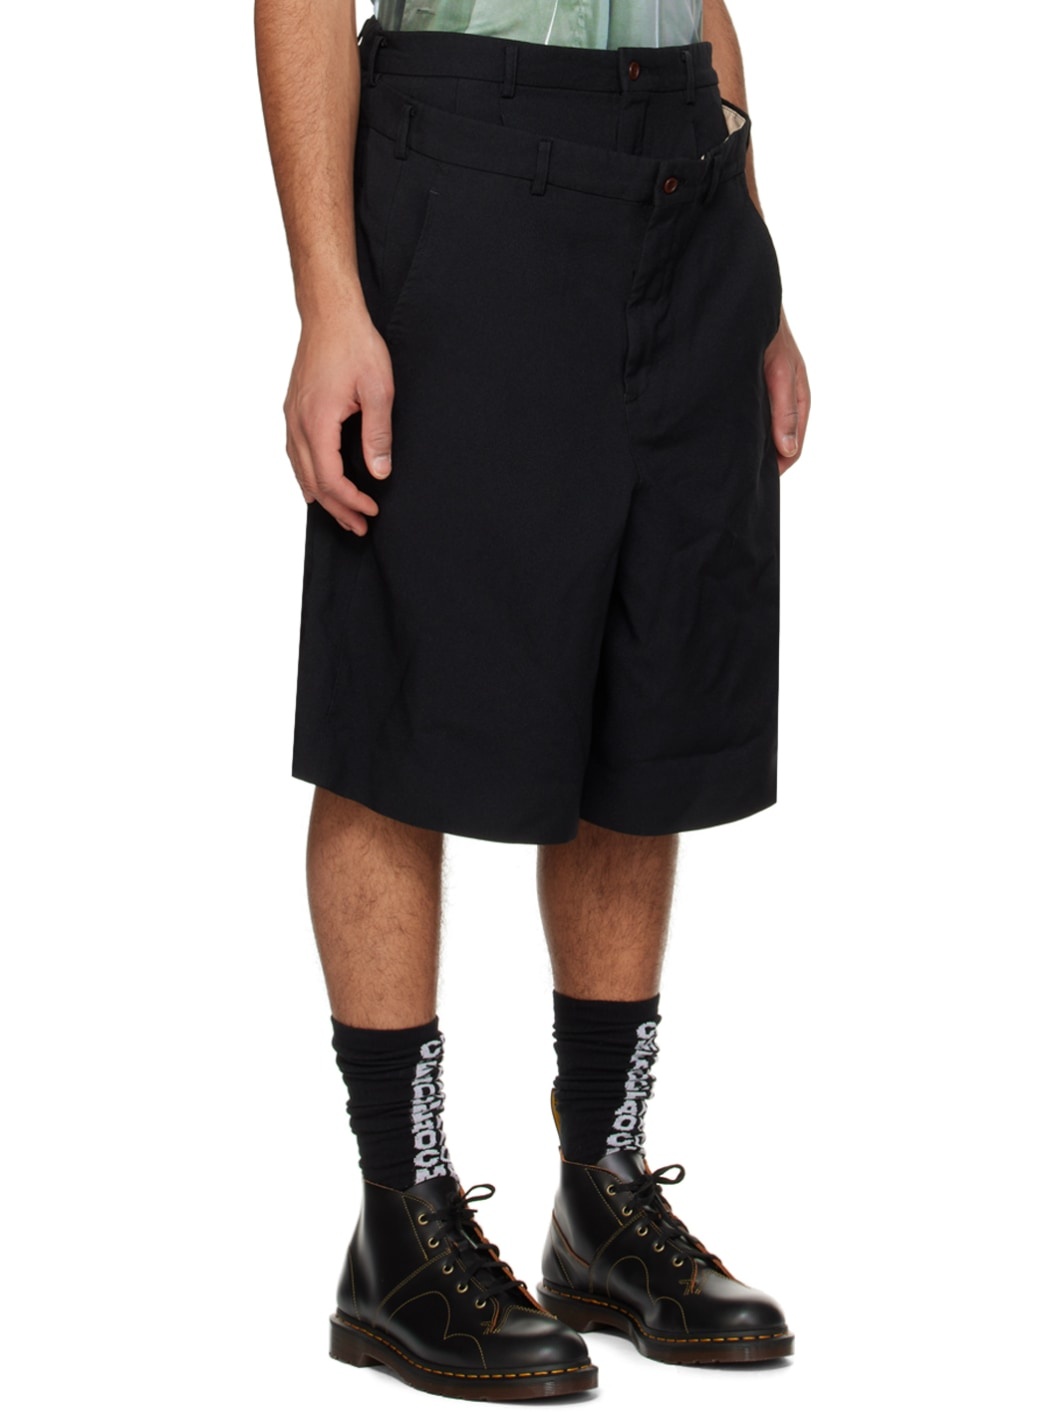 Black Layered Shorts - 2